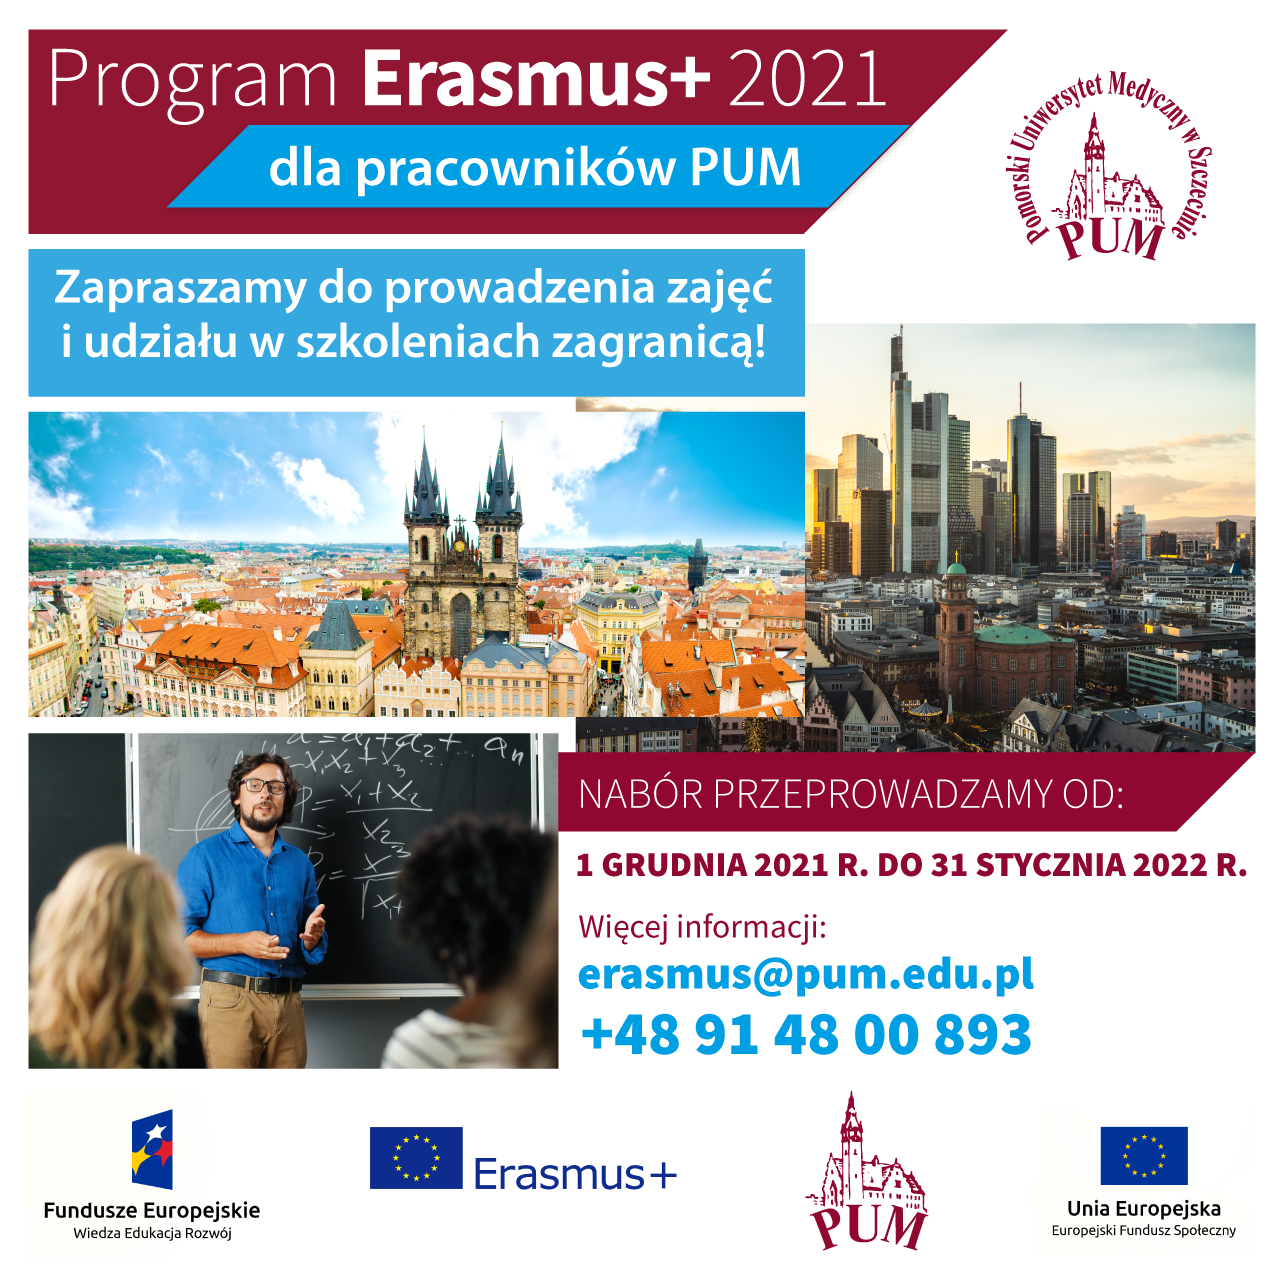 Erasmus+ 2021 dla pracowników PUM